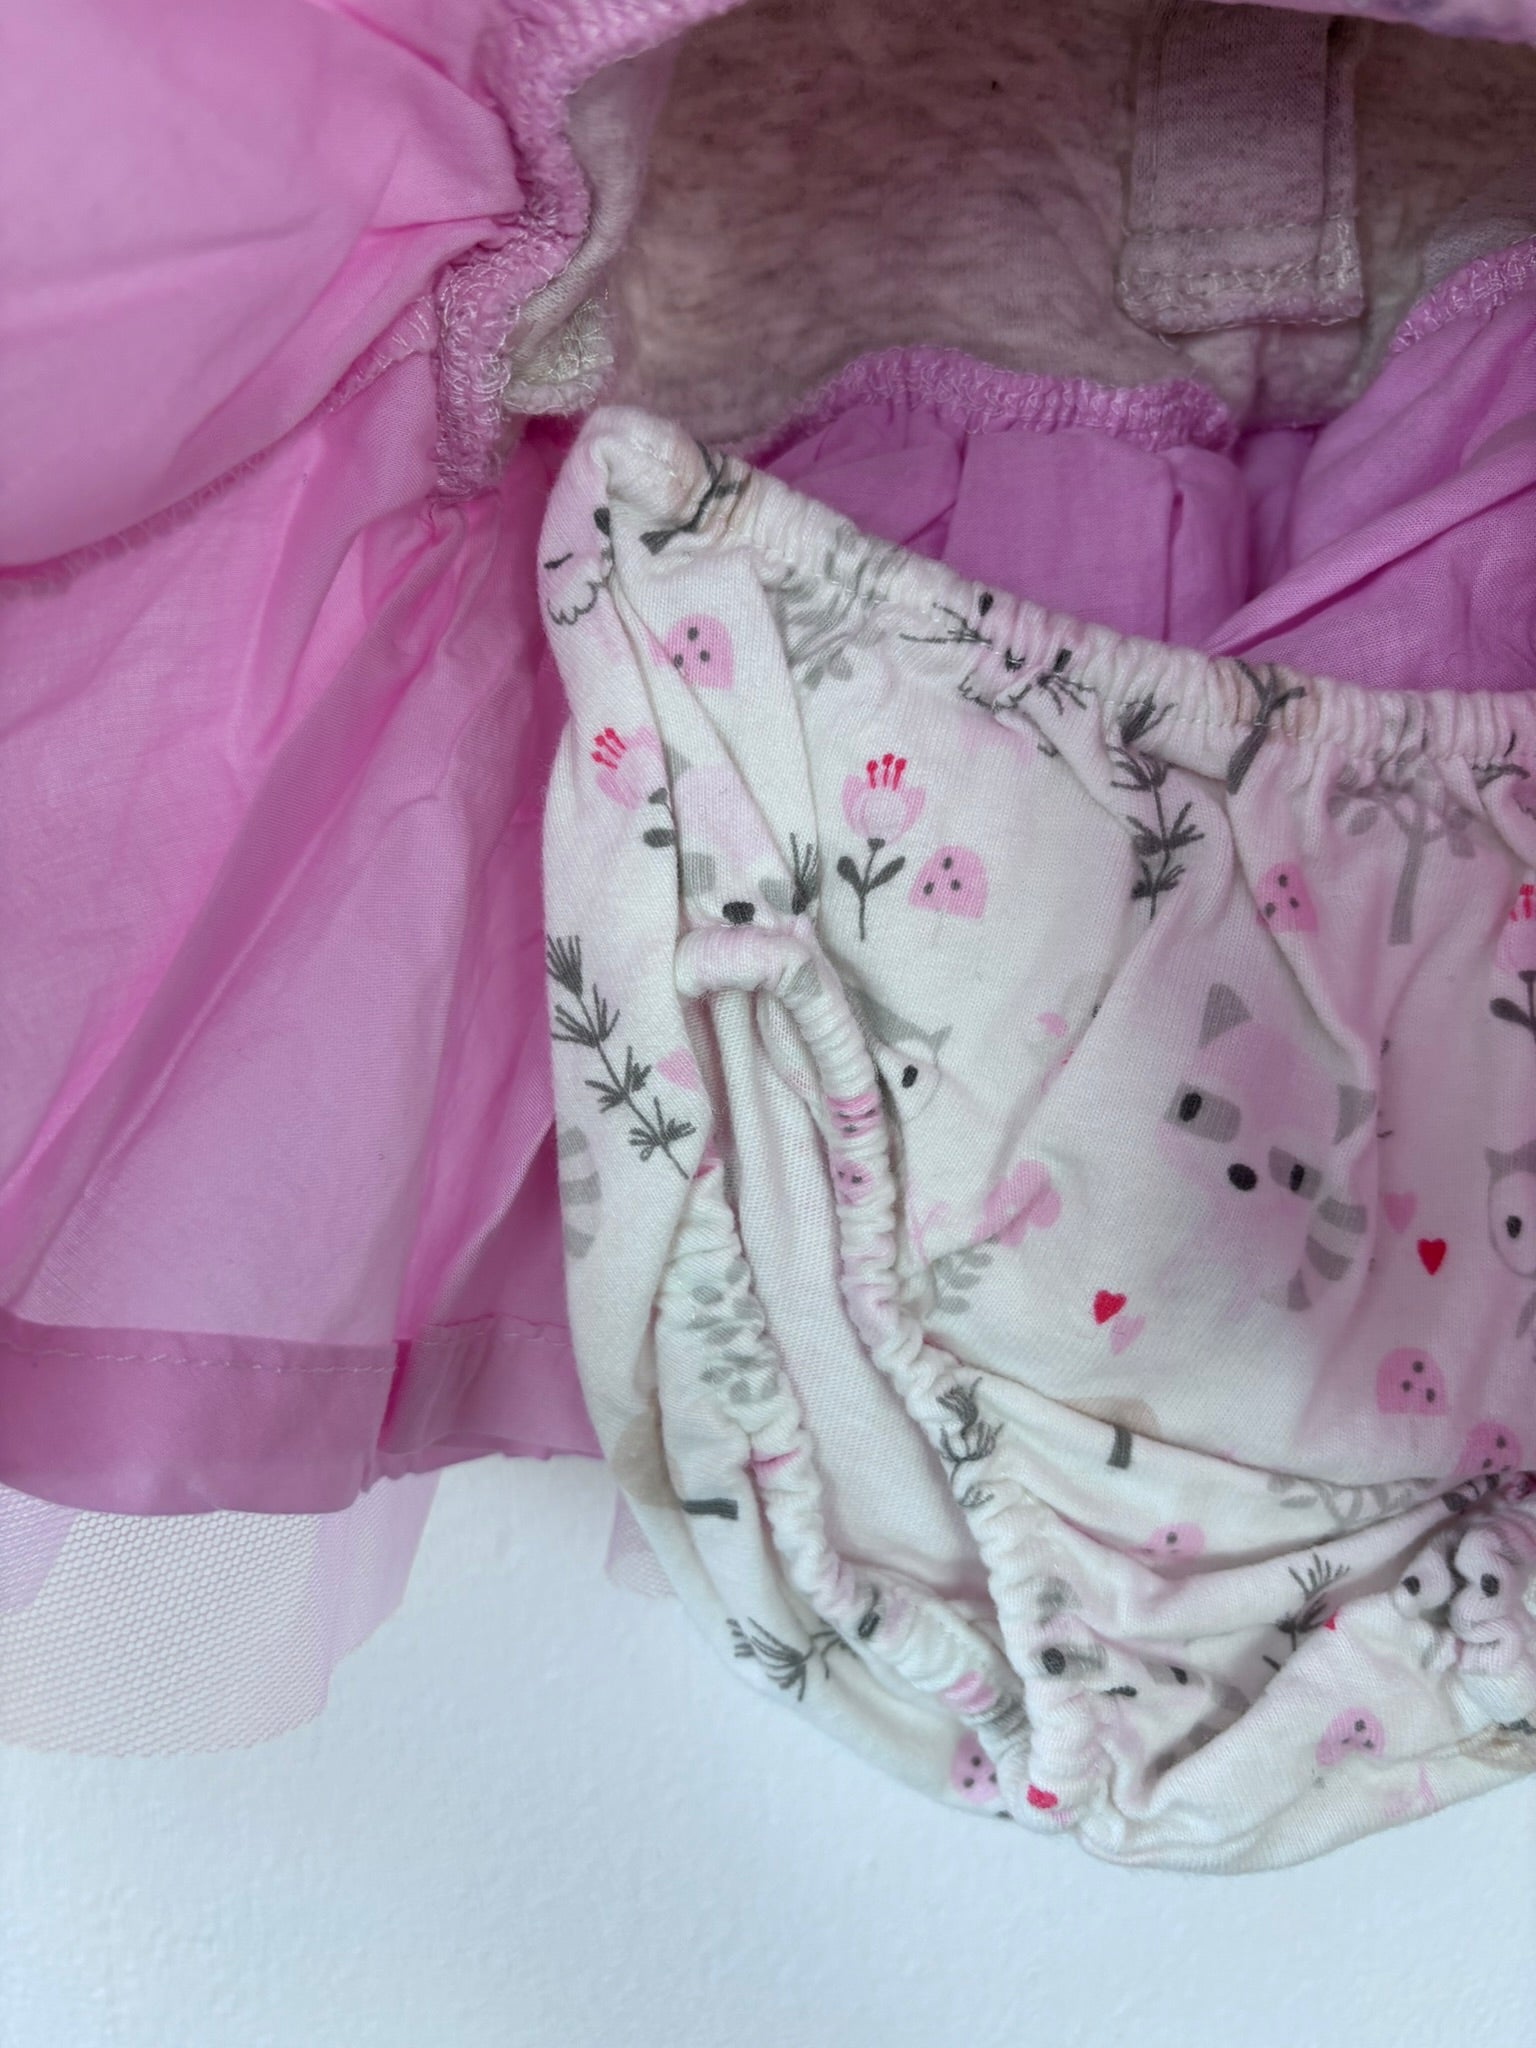 Disney Store 0-3 Months-Dresses-Second Snuggle Preloved